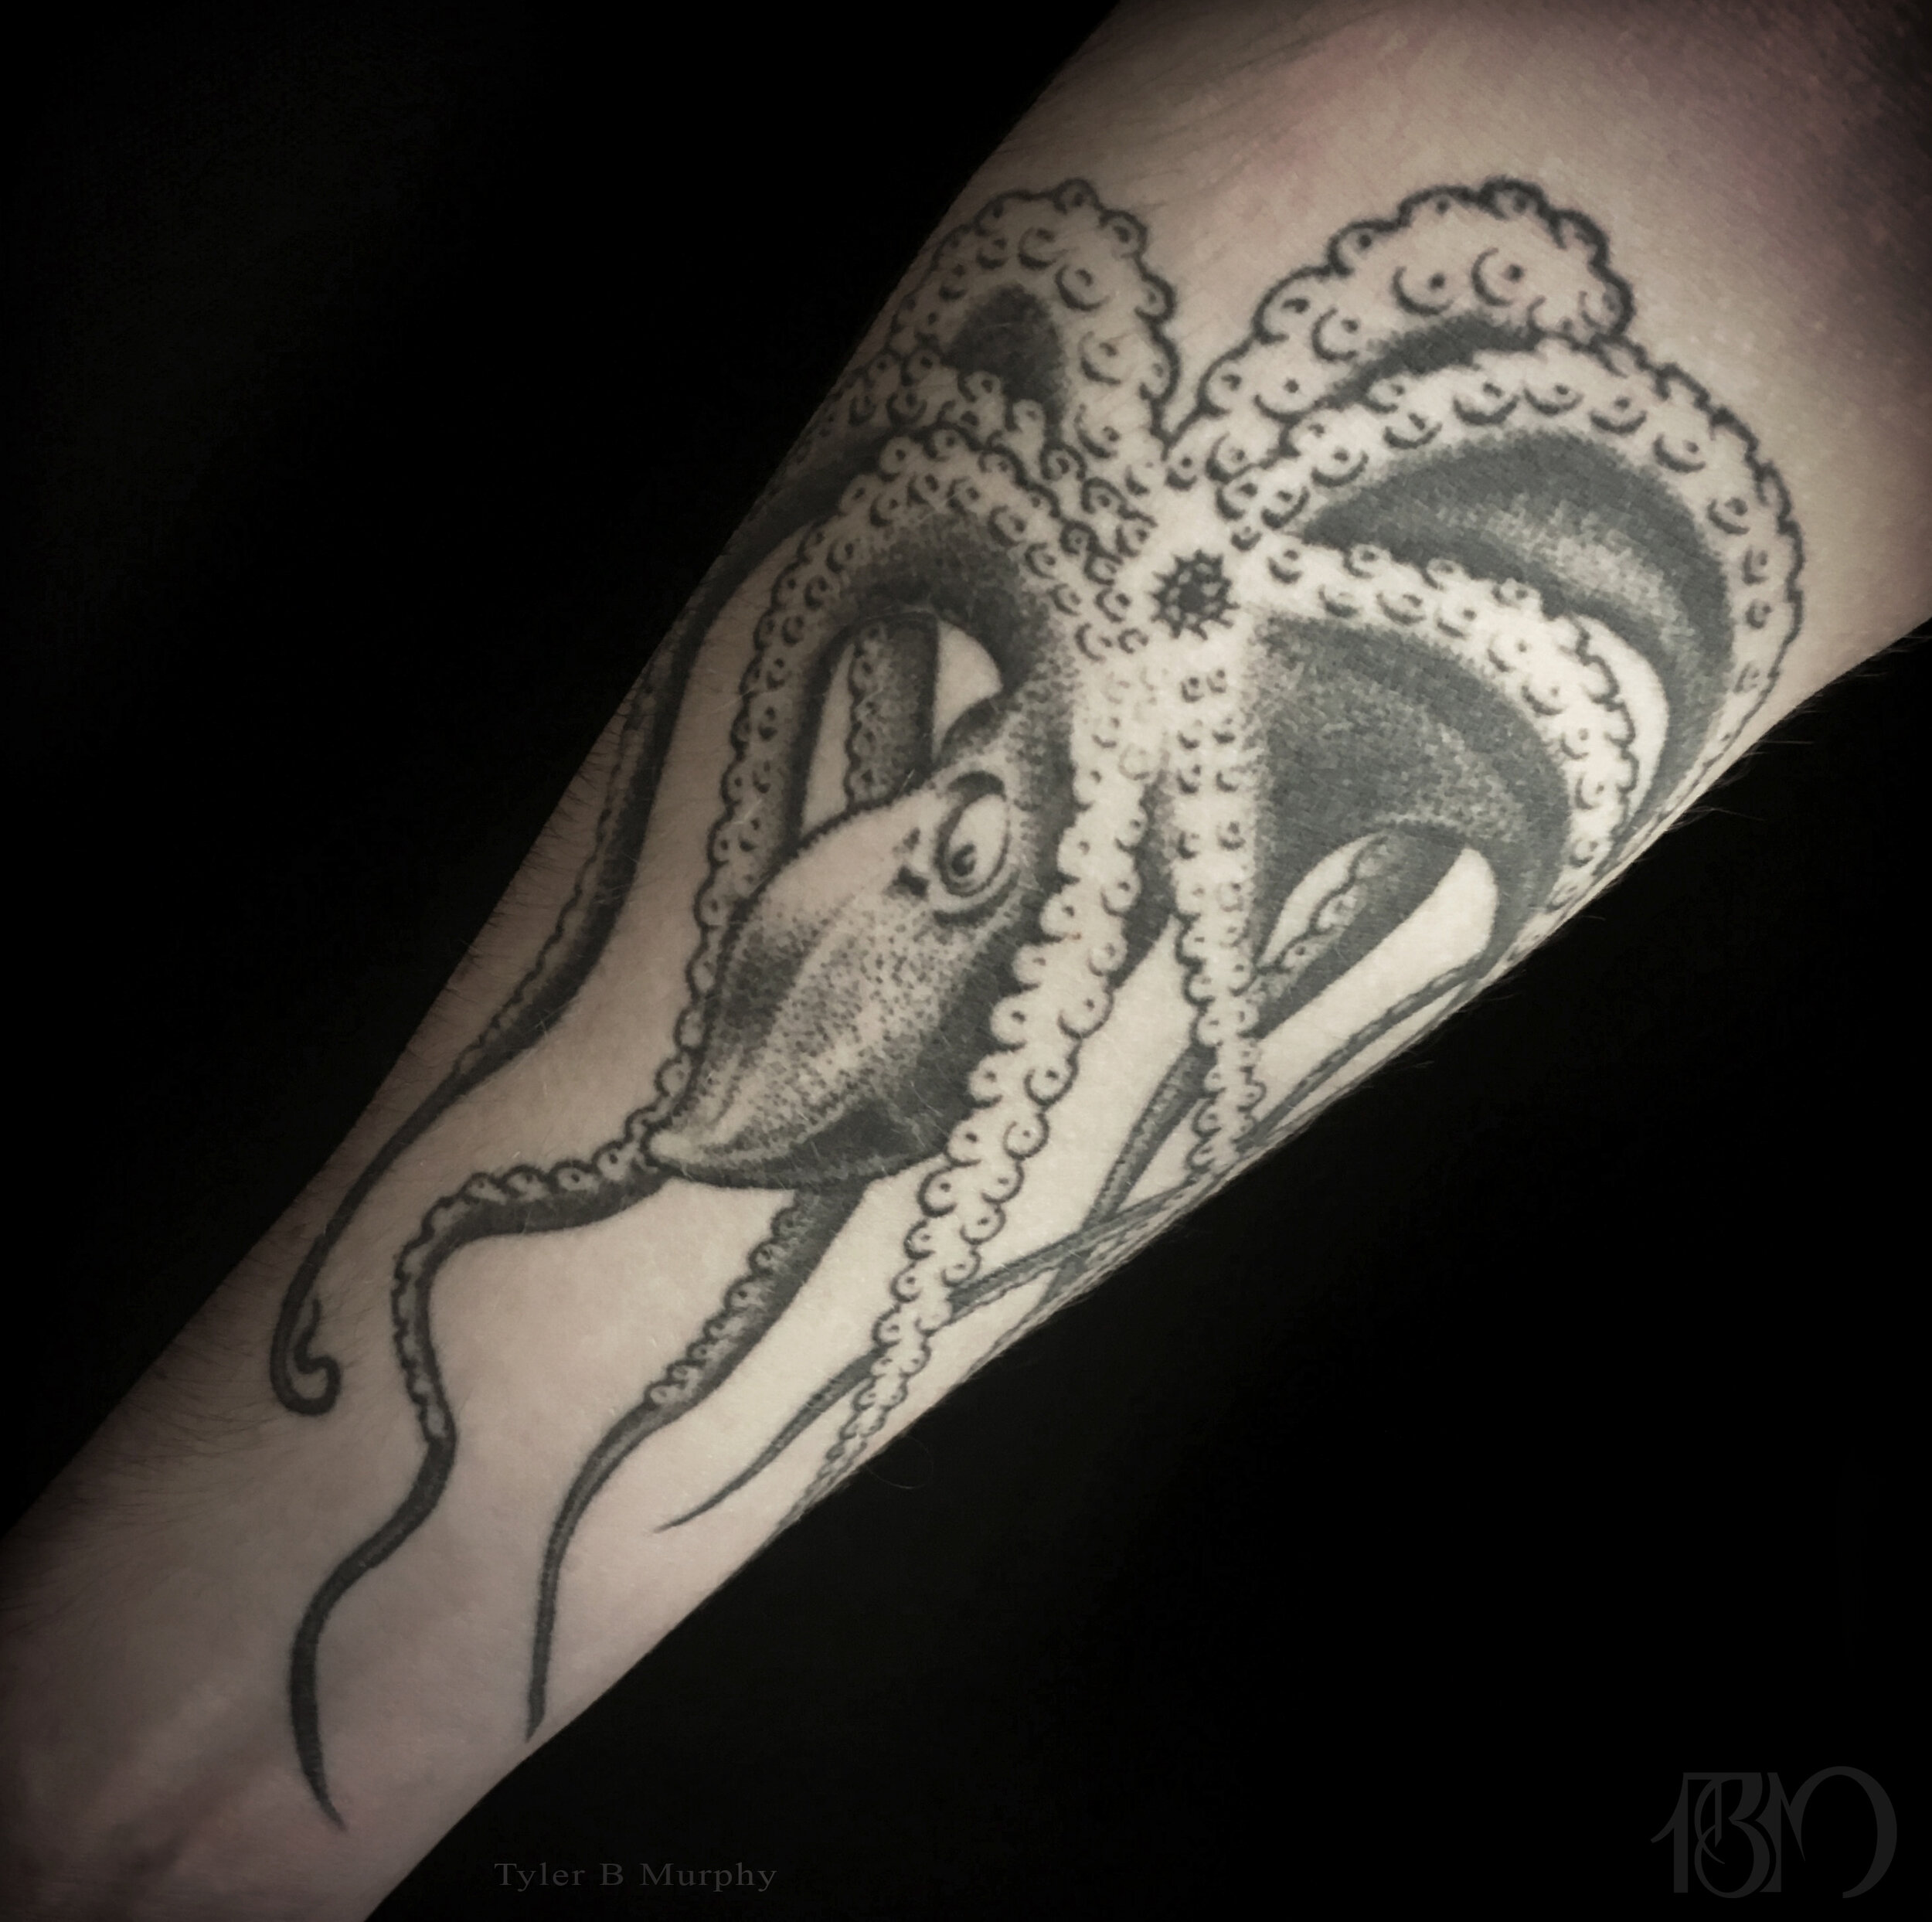 35 -Octopus tattoo Tyler B Murphy copy.jpg